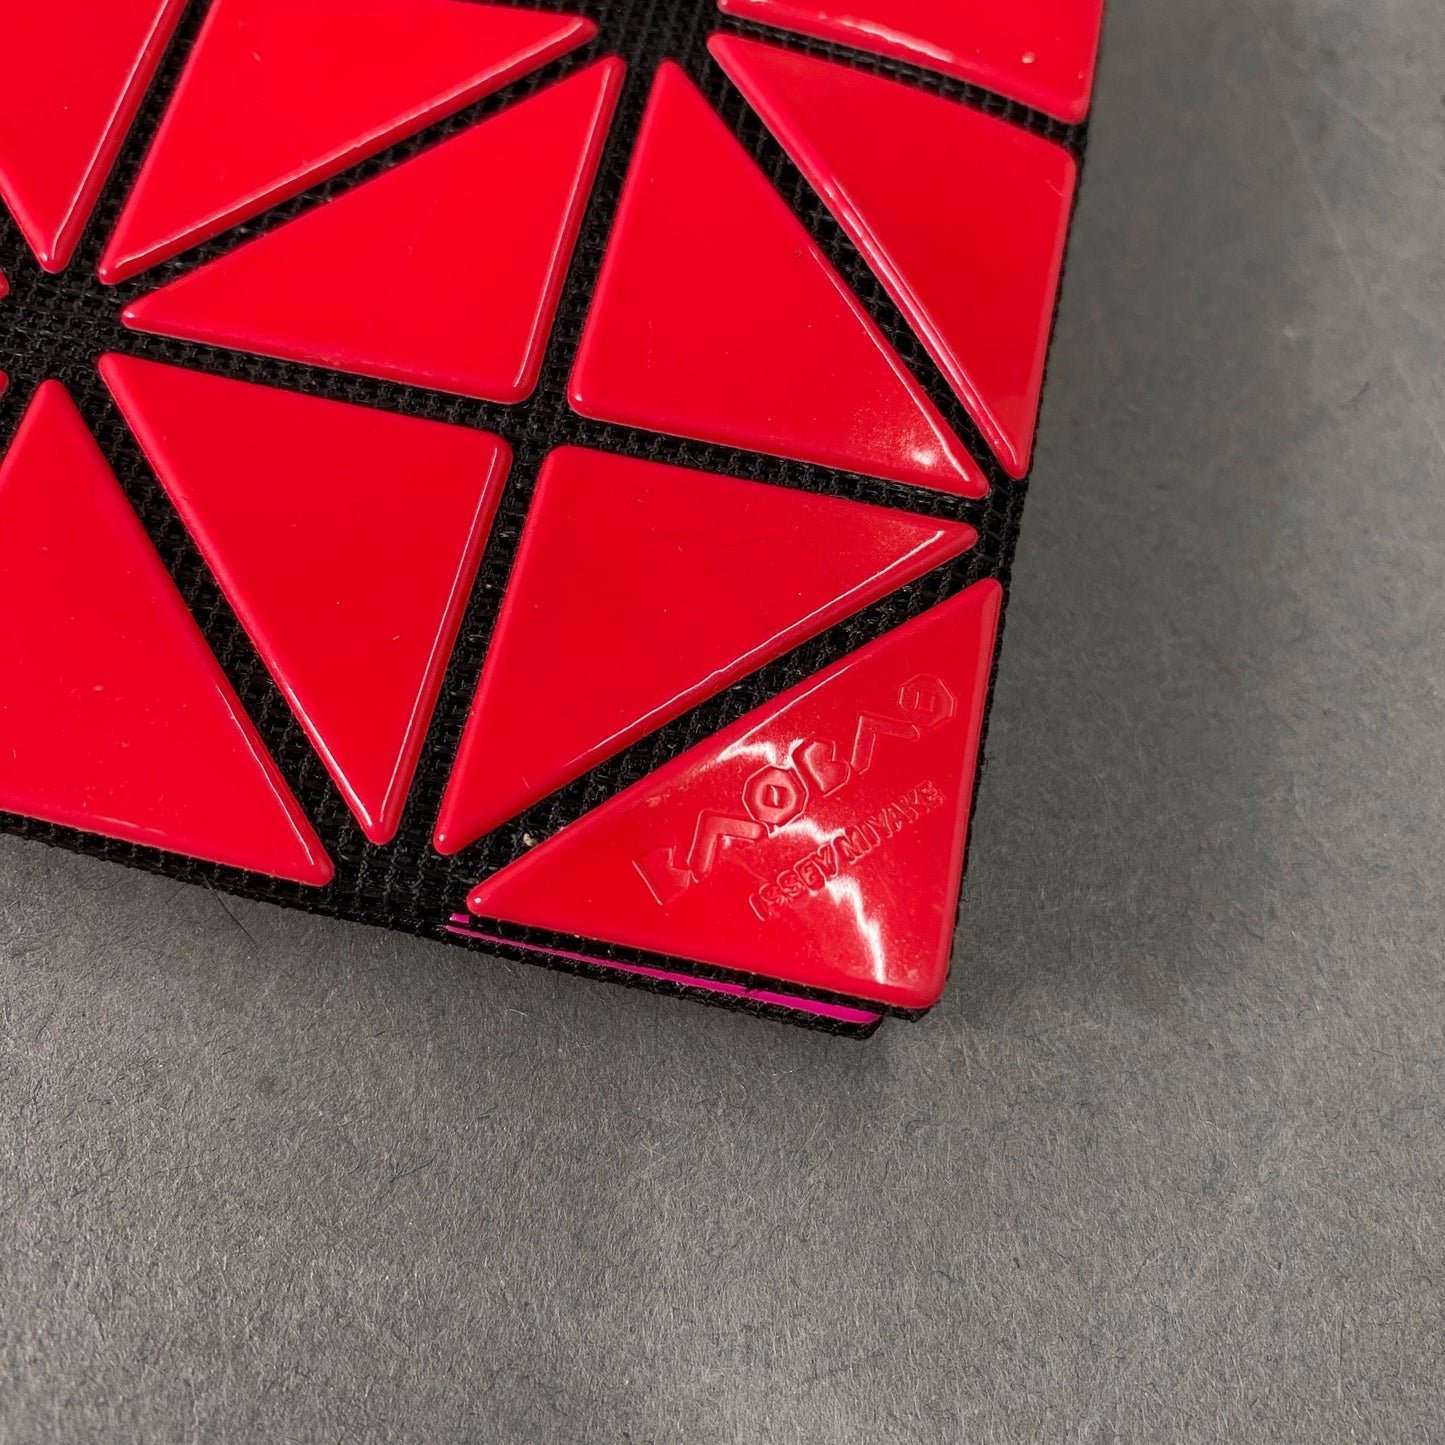 BAOBAO ISSEY MIYAKE バオバオ イッセイミヤケ 二つ折りカードケース レッド ピンク バイカラー レディース 三角形のピース  縦8㎝《16.3㎝》×横11㎝×奥行1㎝ 服飾雑貨 財布